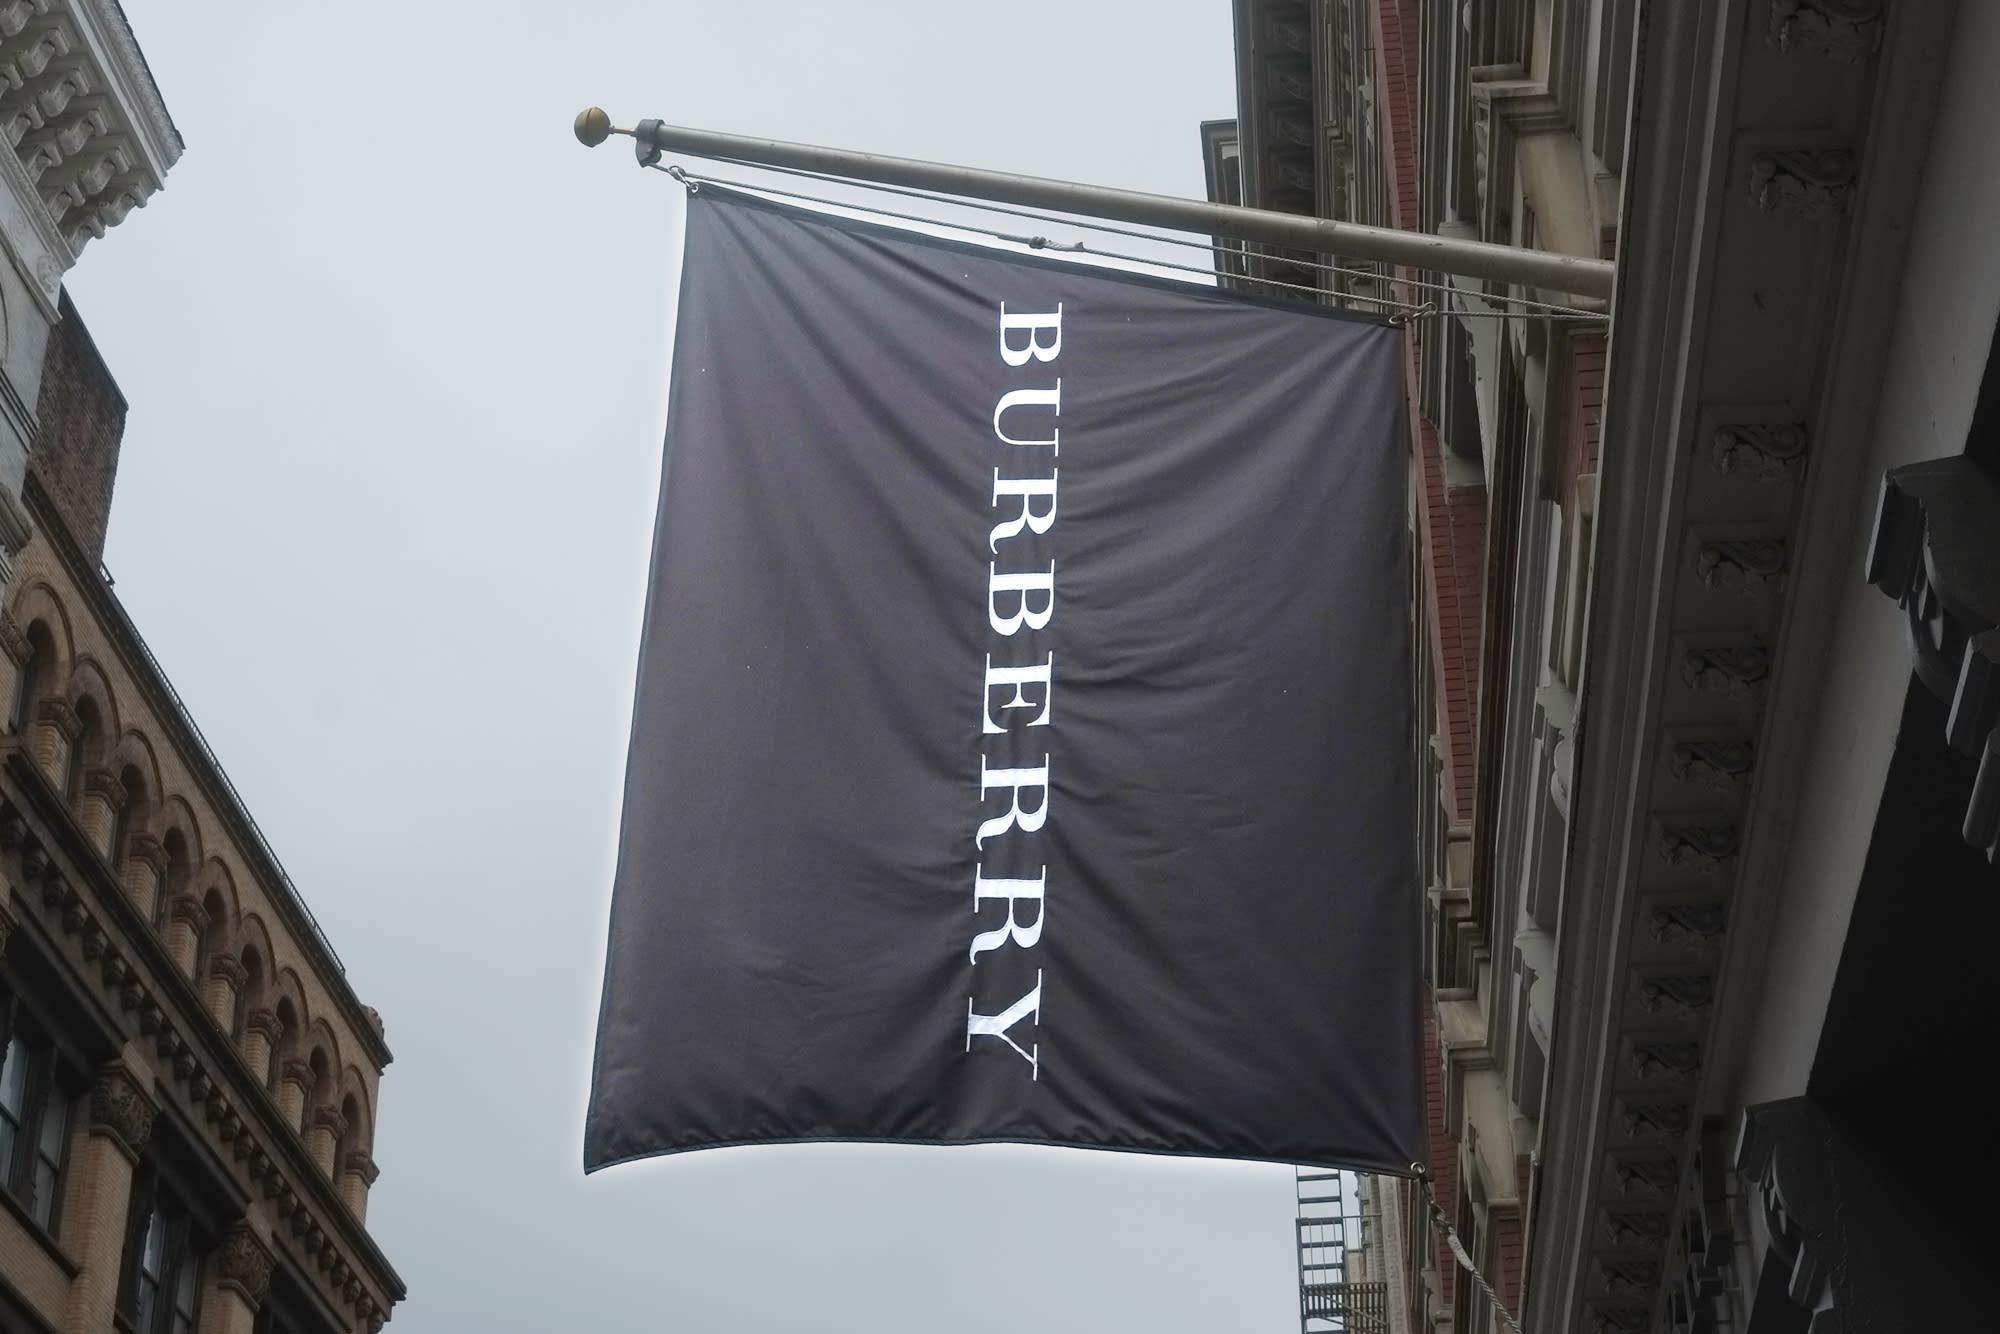 burberry black friday sale 2018